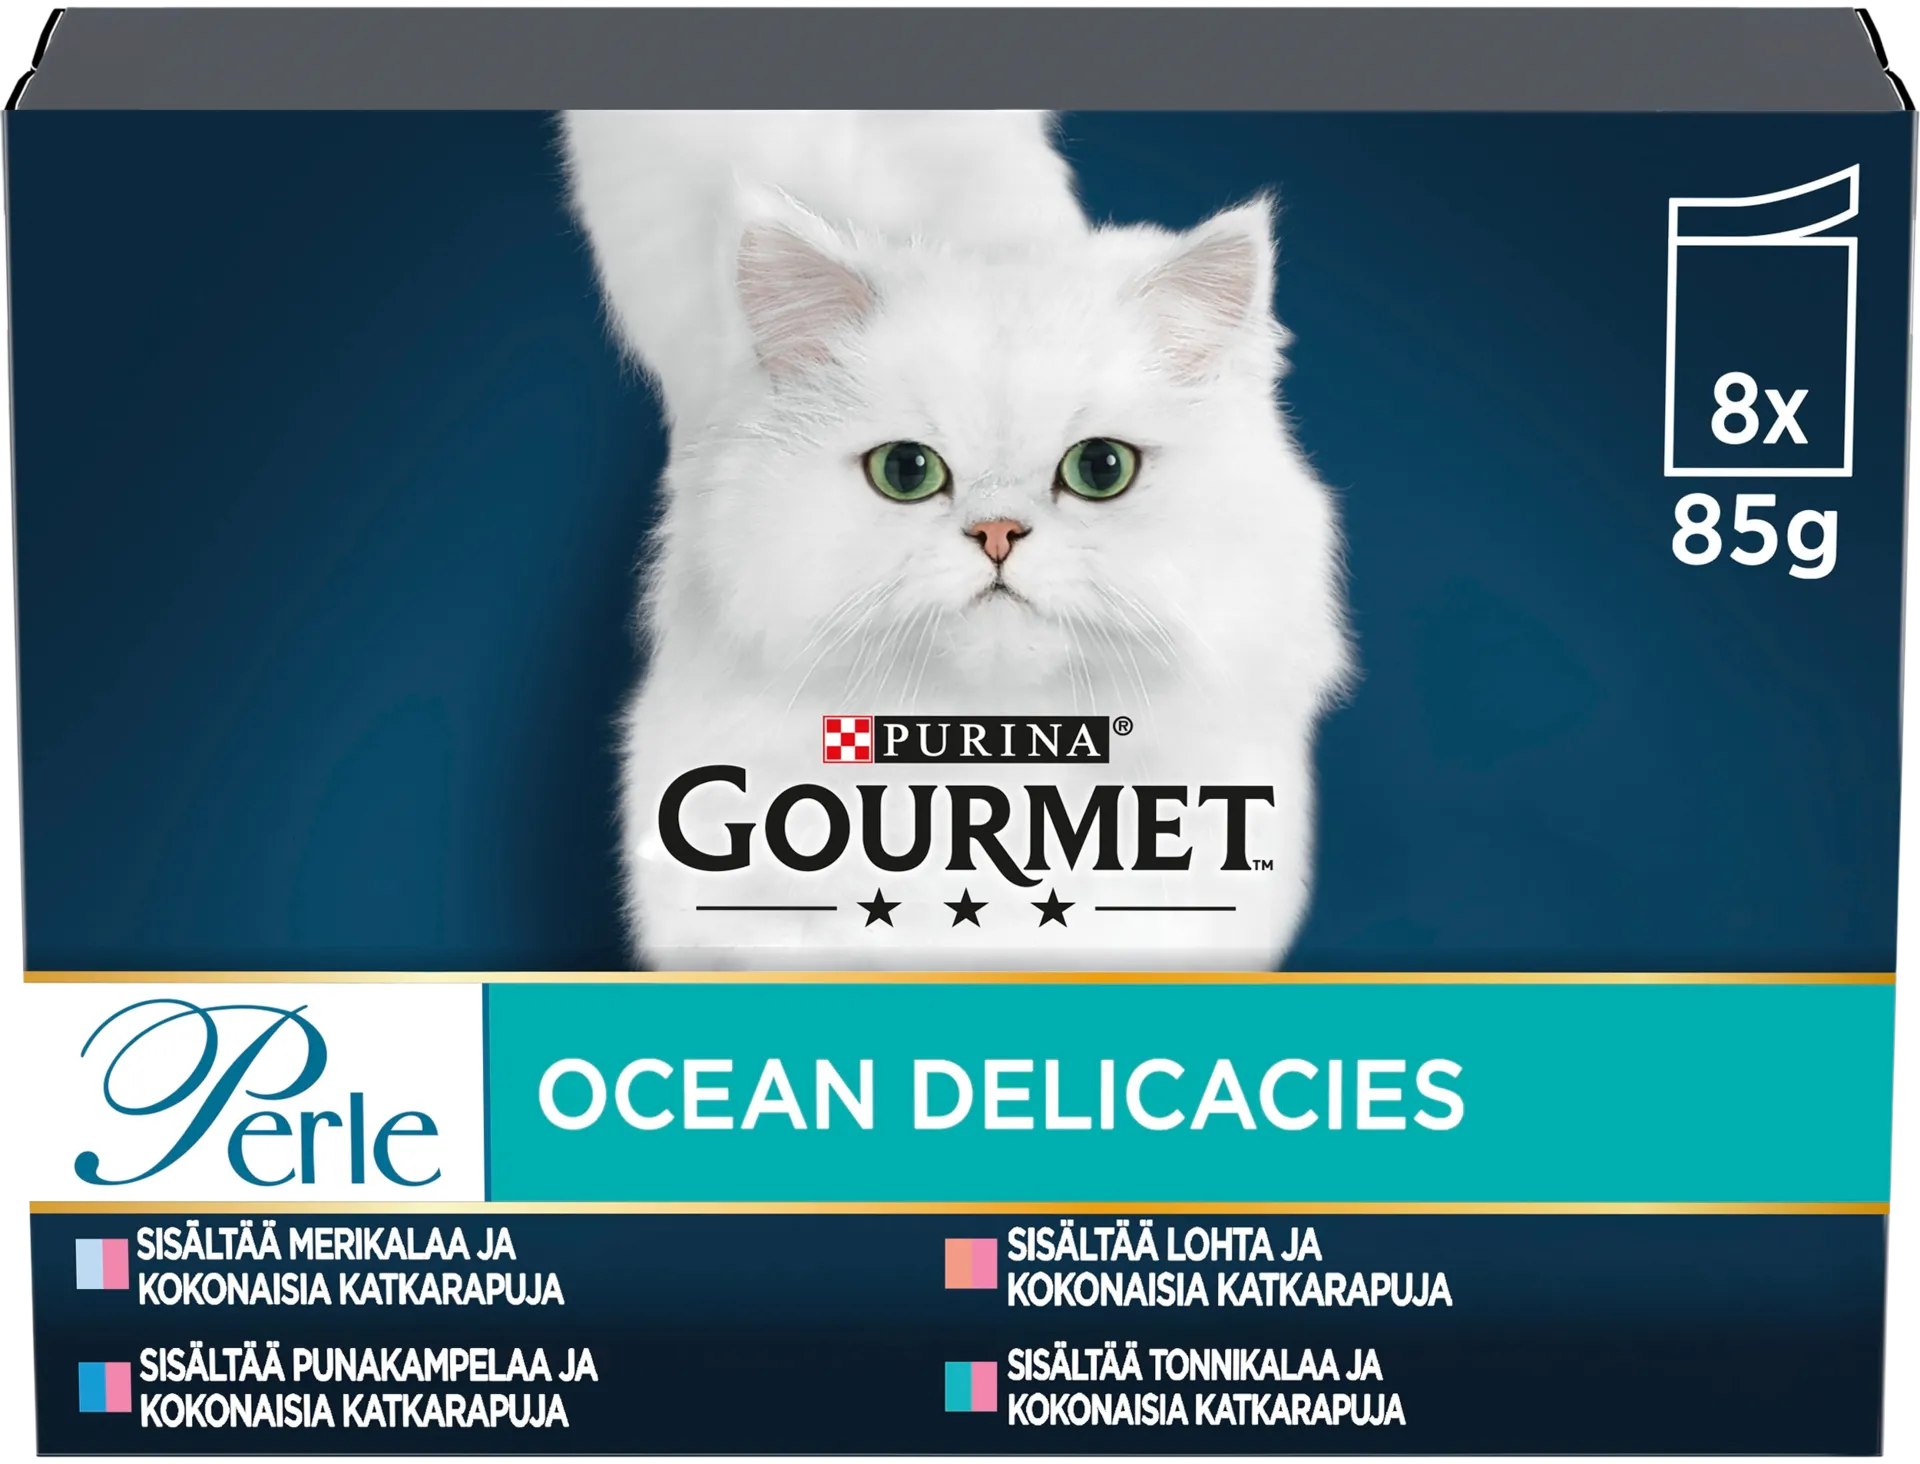 Gourmet 8x85g Perle Sea Delicacies lajitelma 4 varianttia kissanruoka